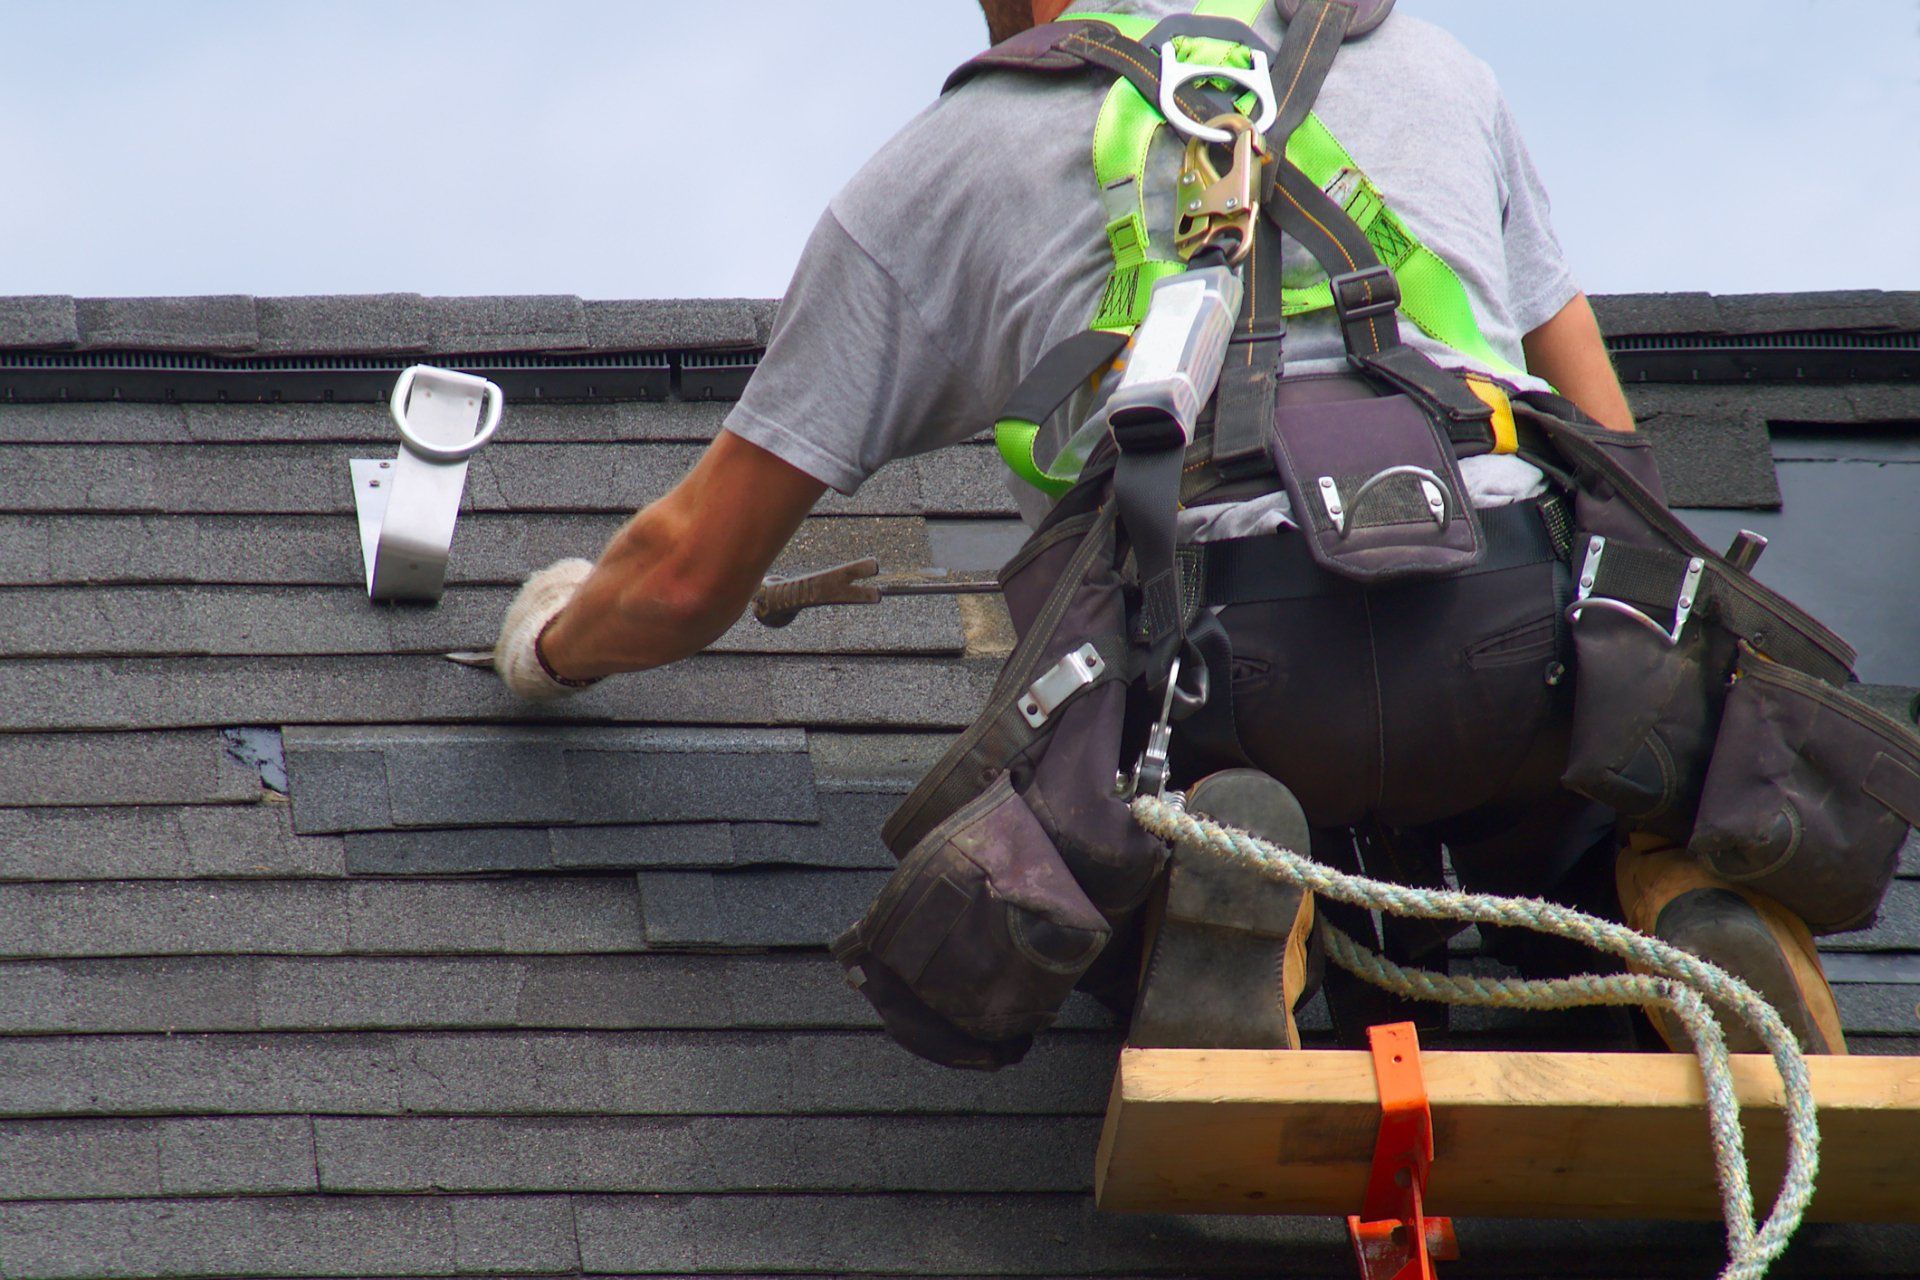 Roof repair construction worker — Benton, AR — Advanced Roofing